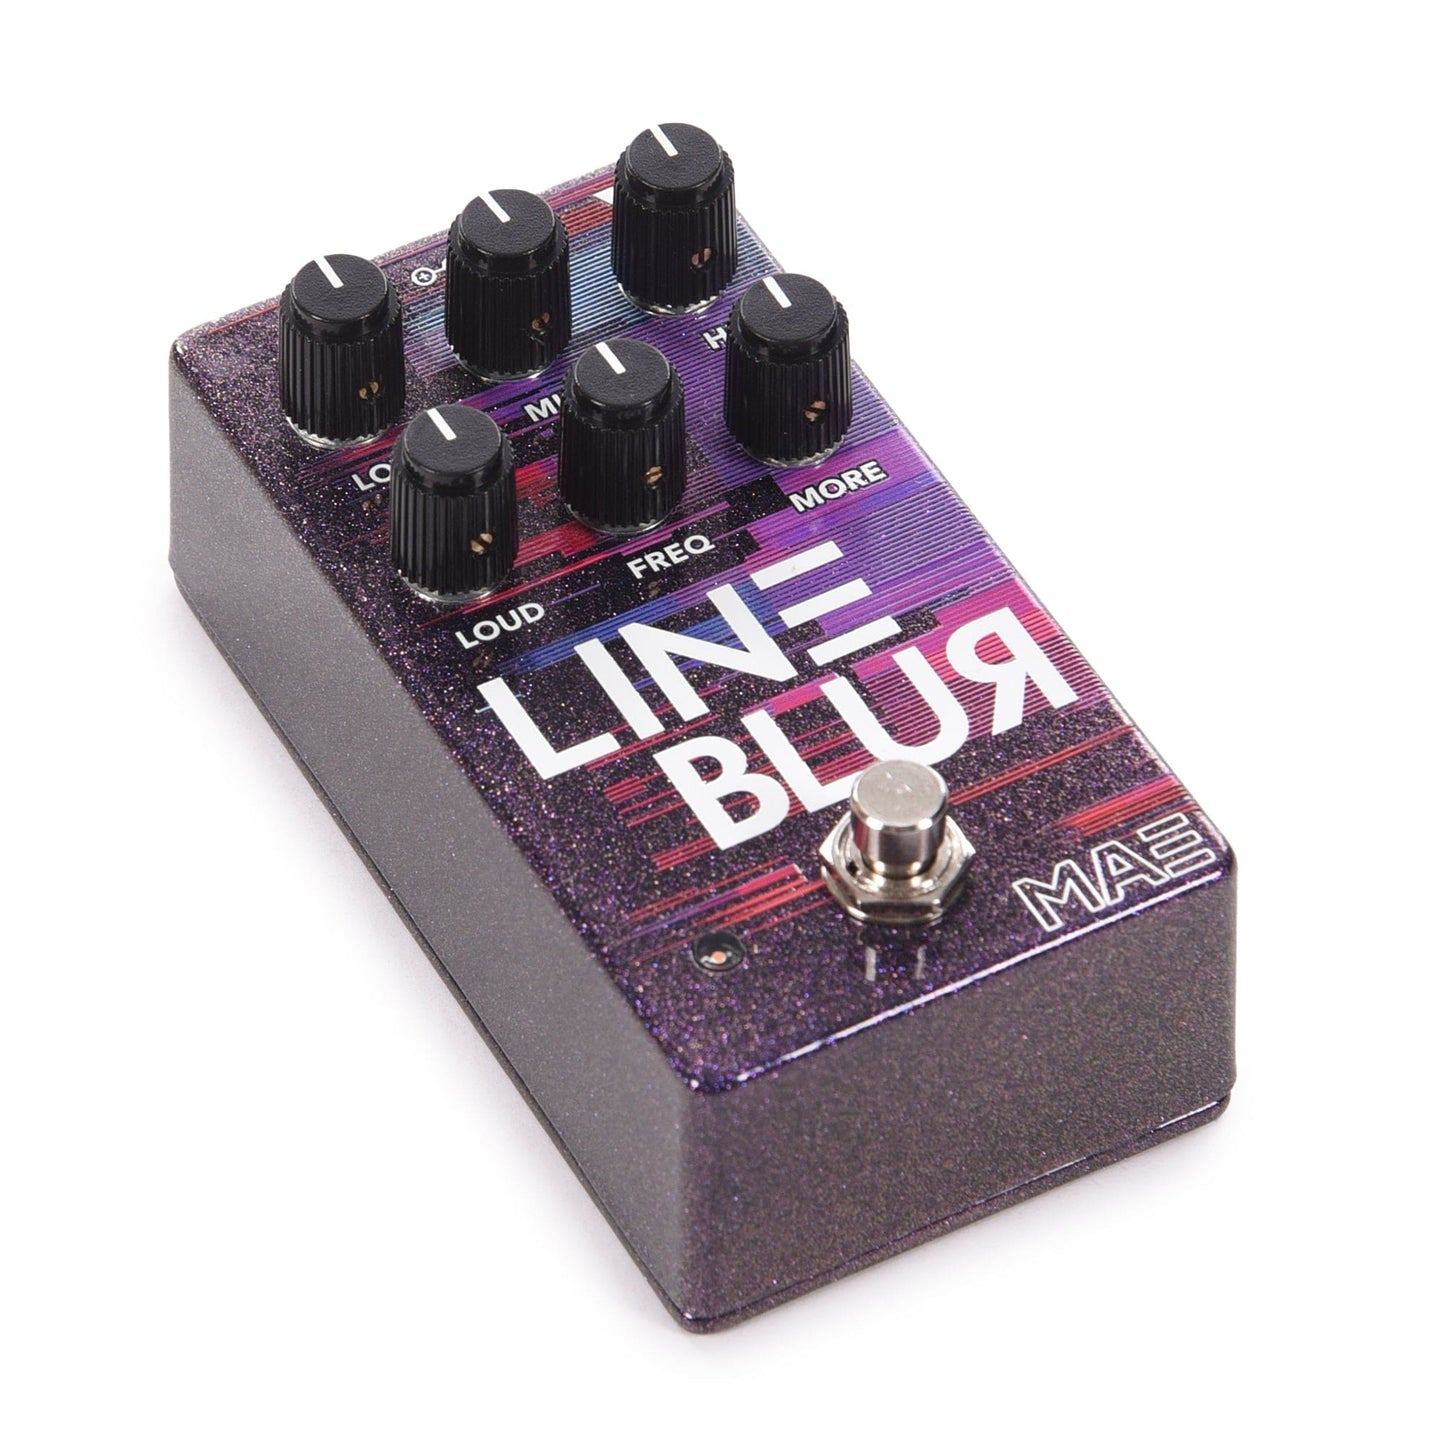 Mask Audio Electronics Line Blur EQ Pedal Dark Purple Effects and Pedals / EQ